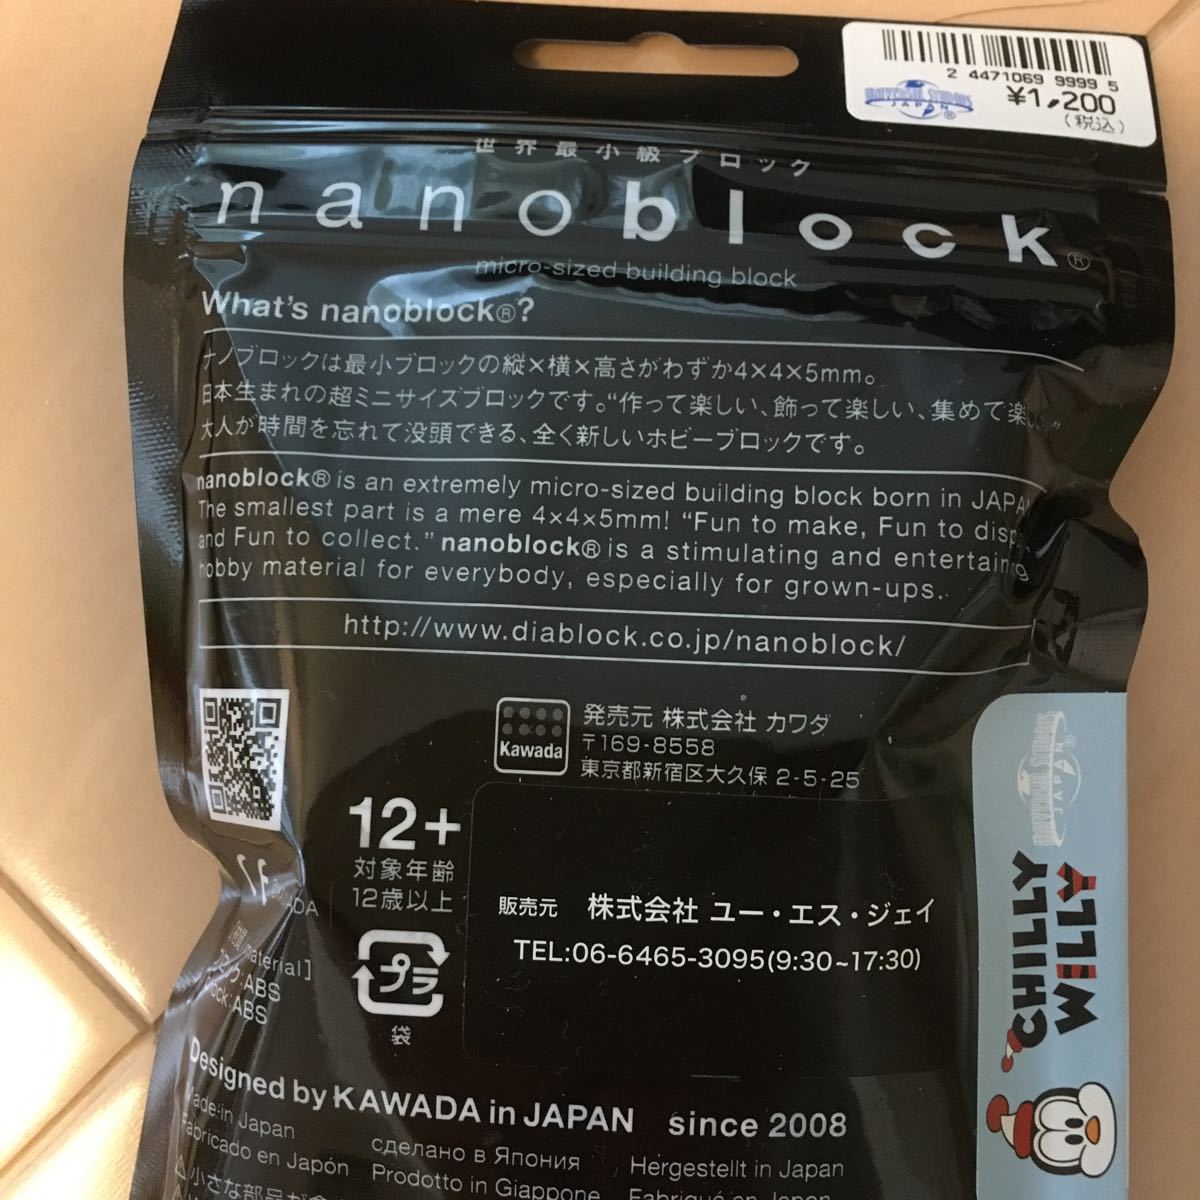 USJ nanoblock Chilly Willy  item  sesame street Japan limited 